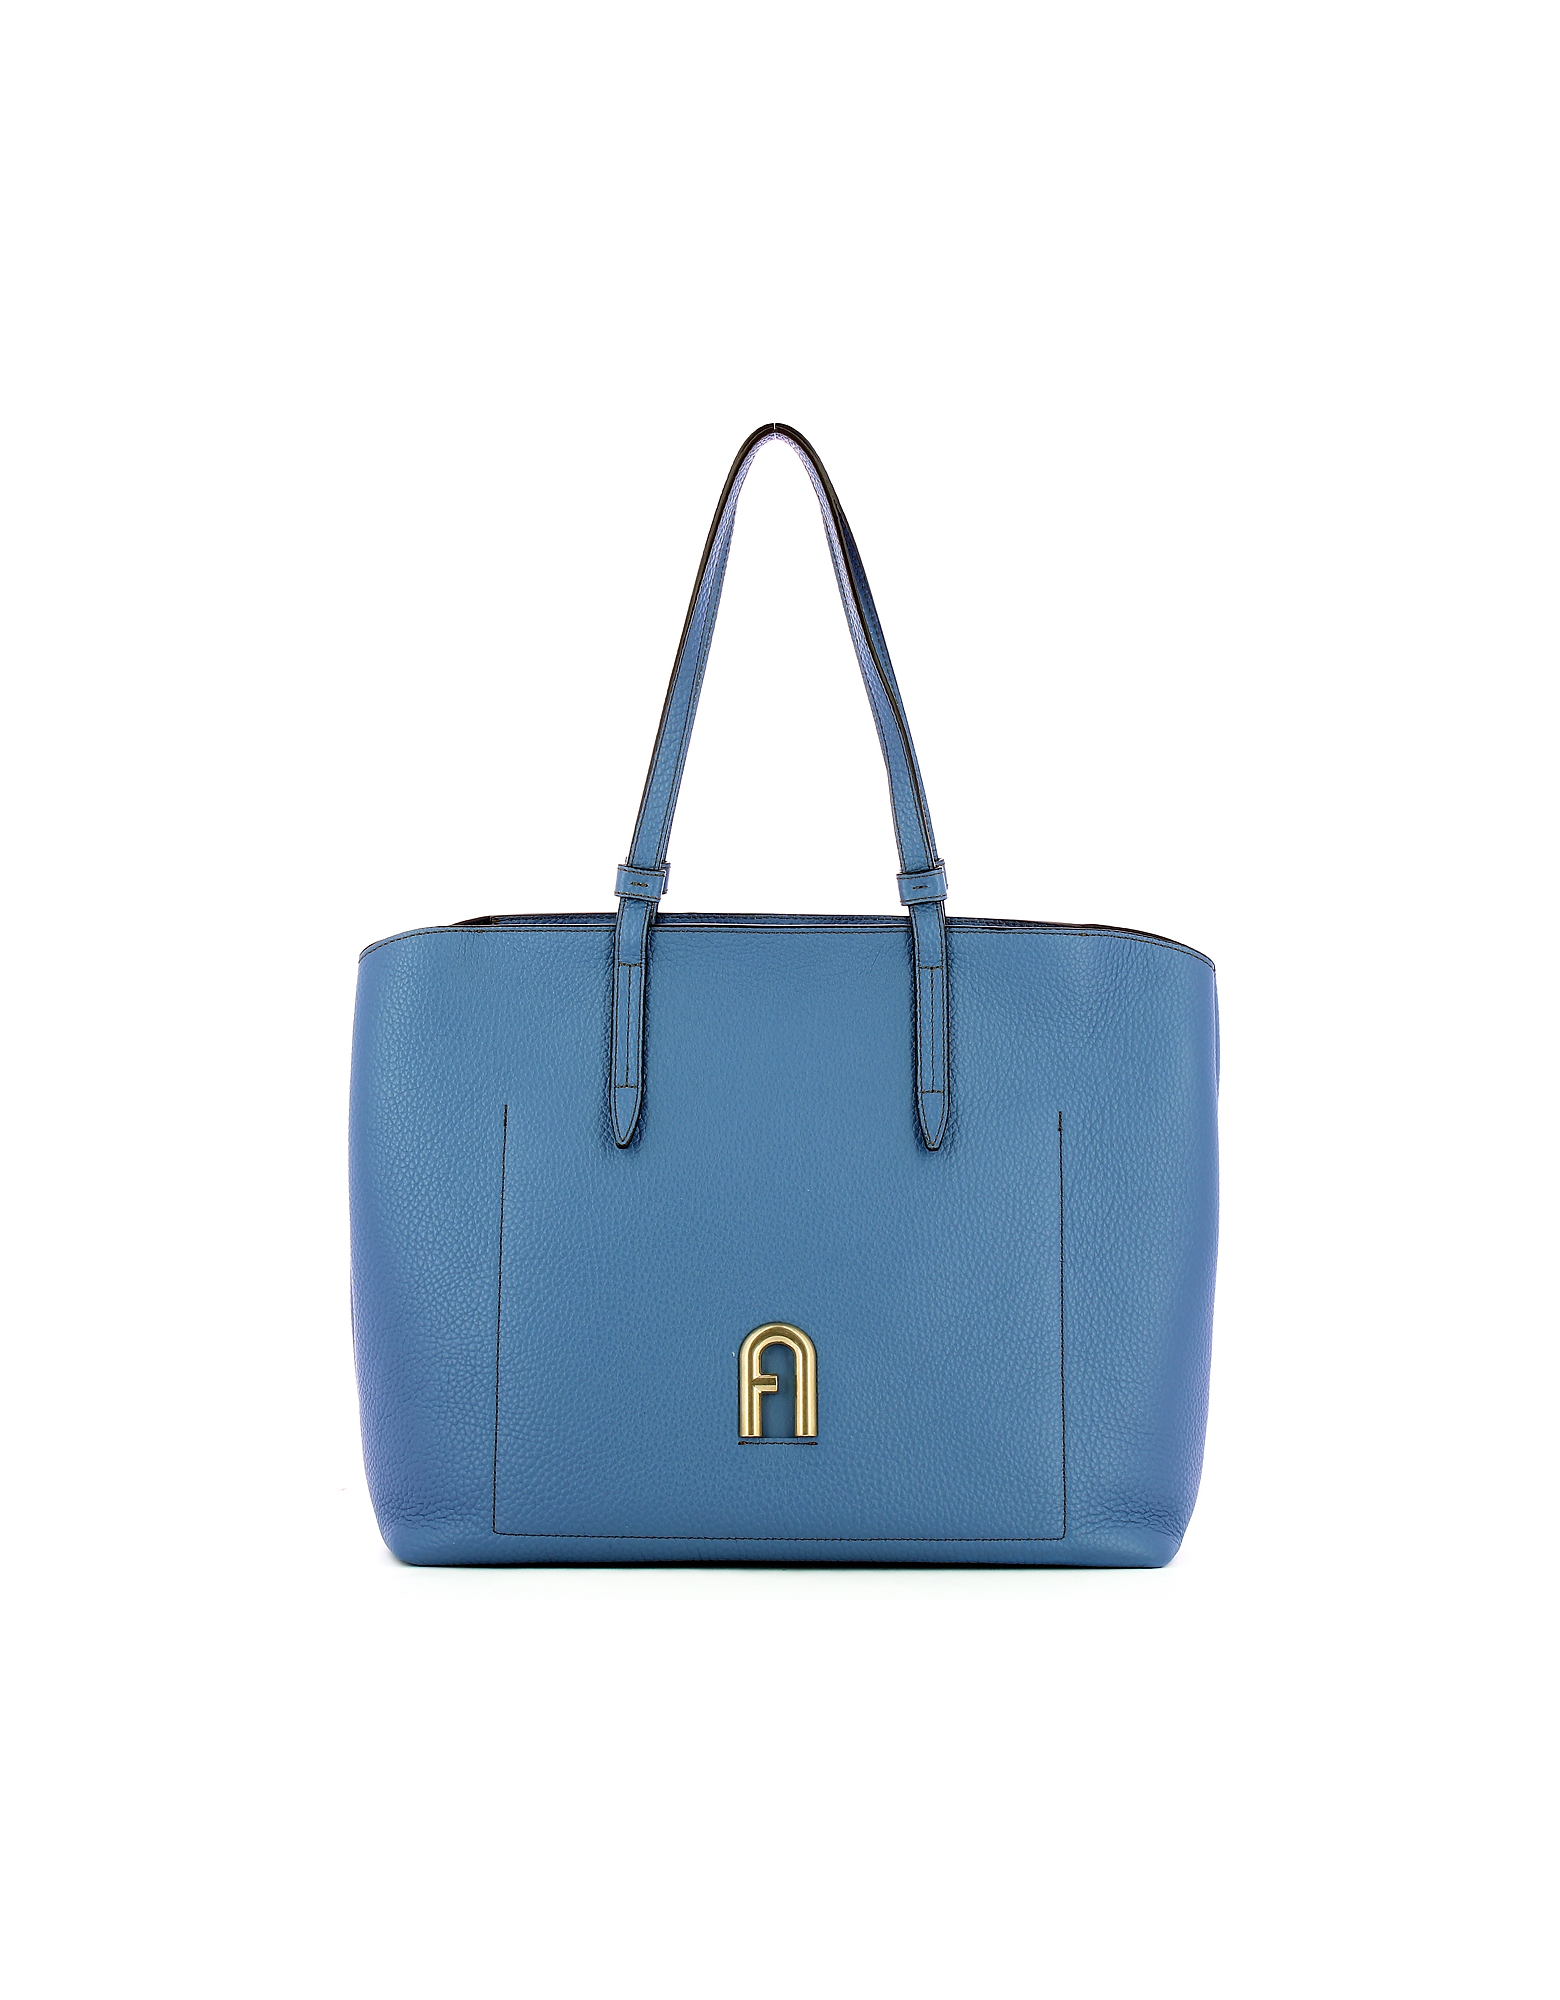 Furla Designer Handbags Women's Bag